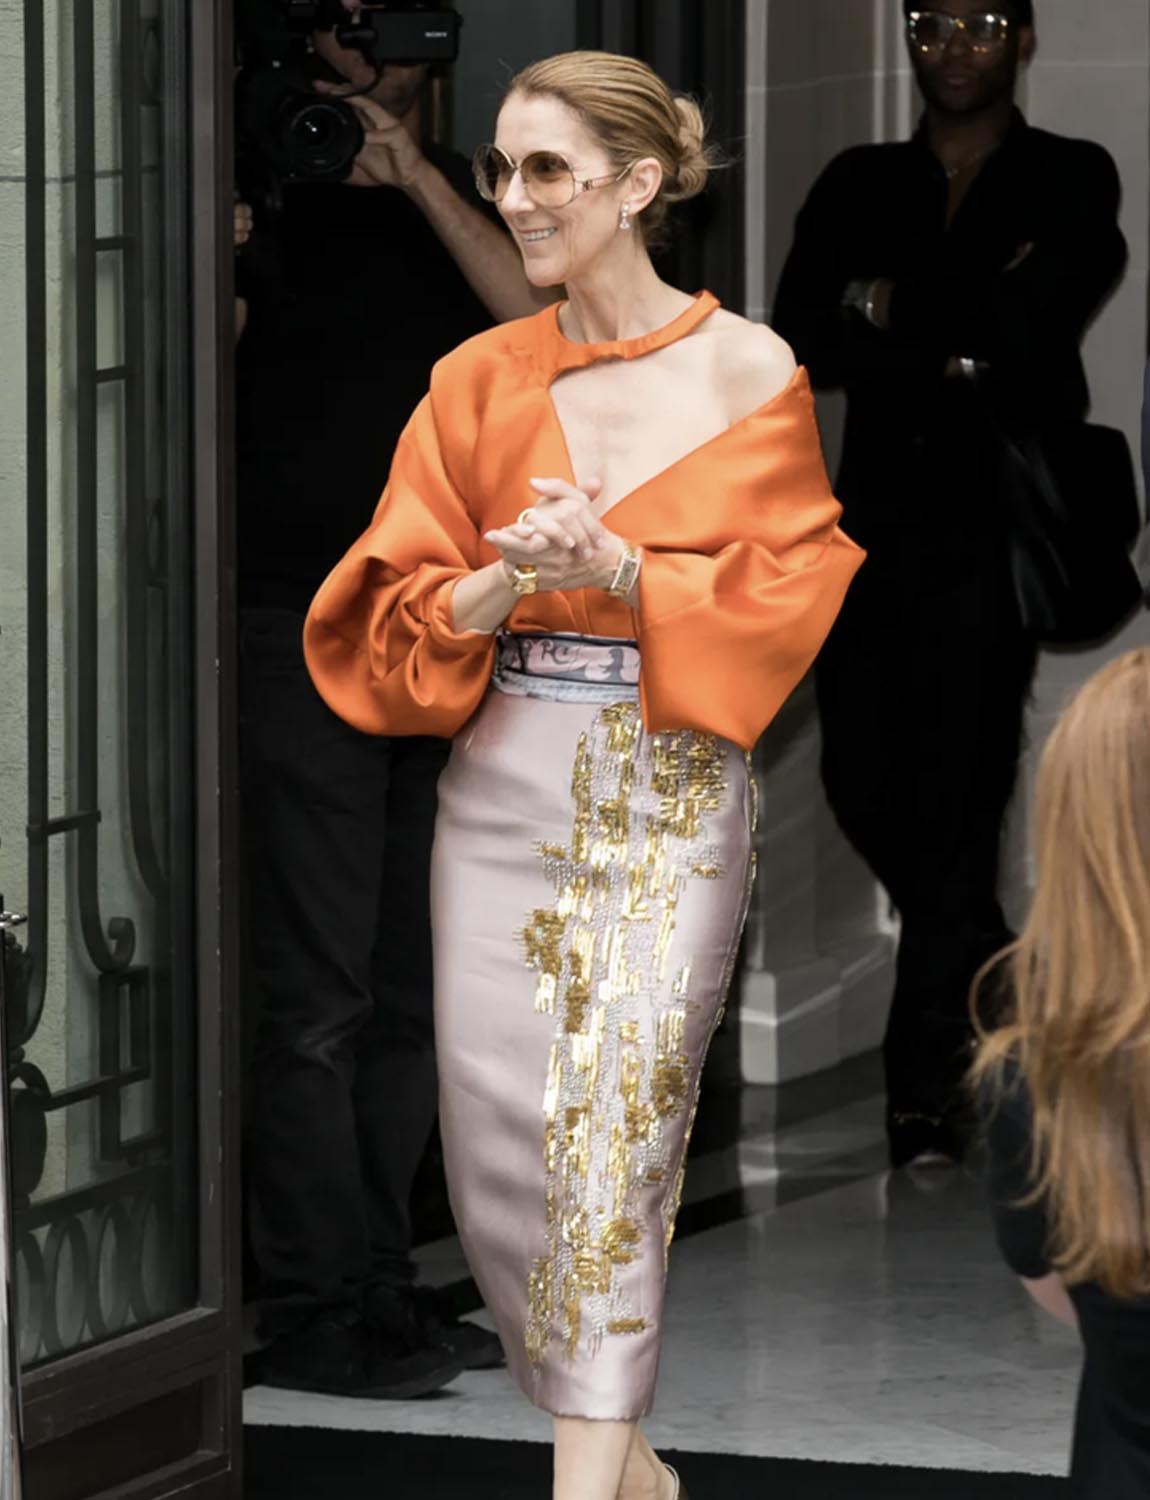 Celine Dione wearing Bibhu Mohapatra dress